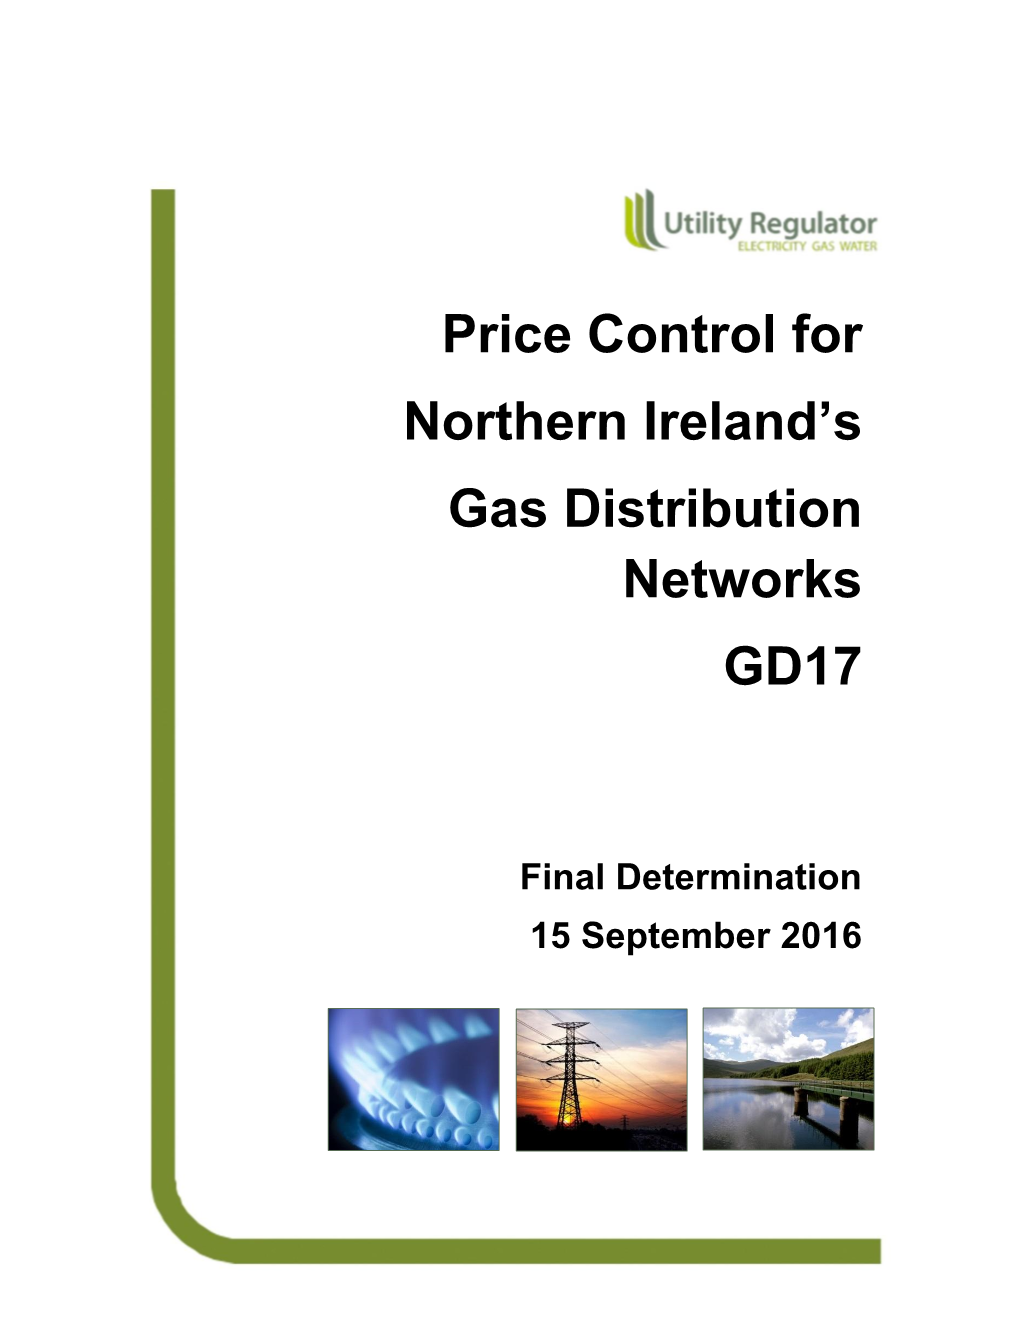 GD17 Final Determination, Utility Regulator for Northern Ireland, 2016